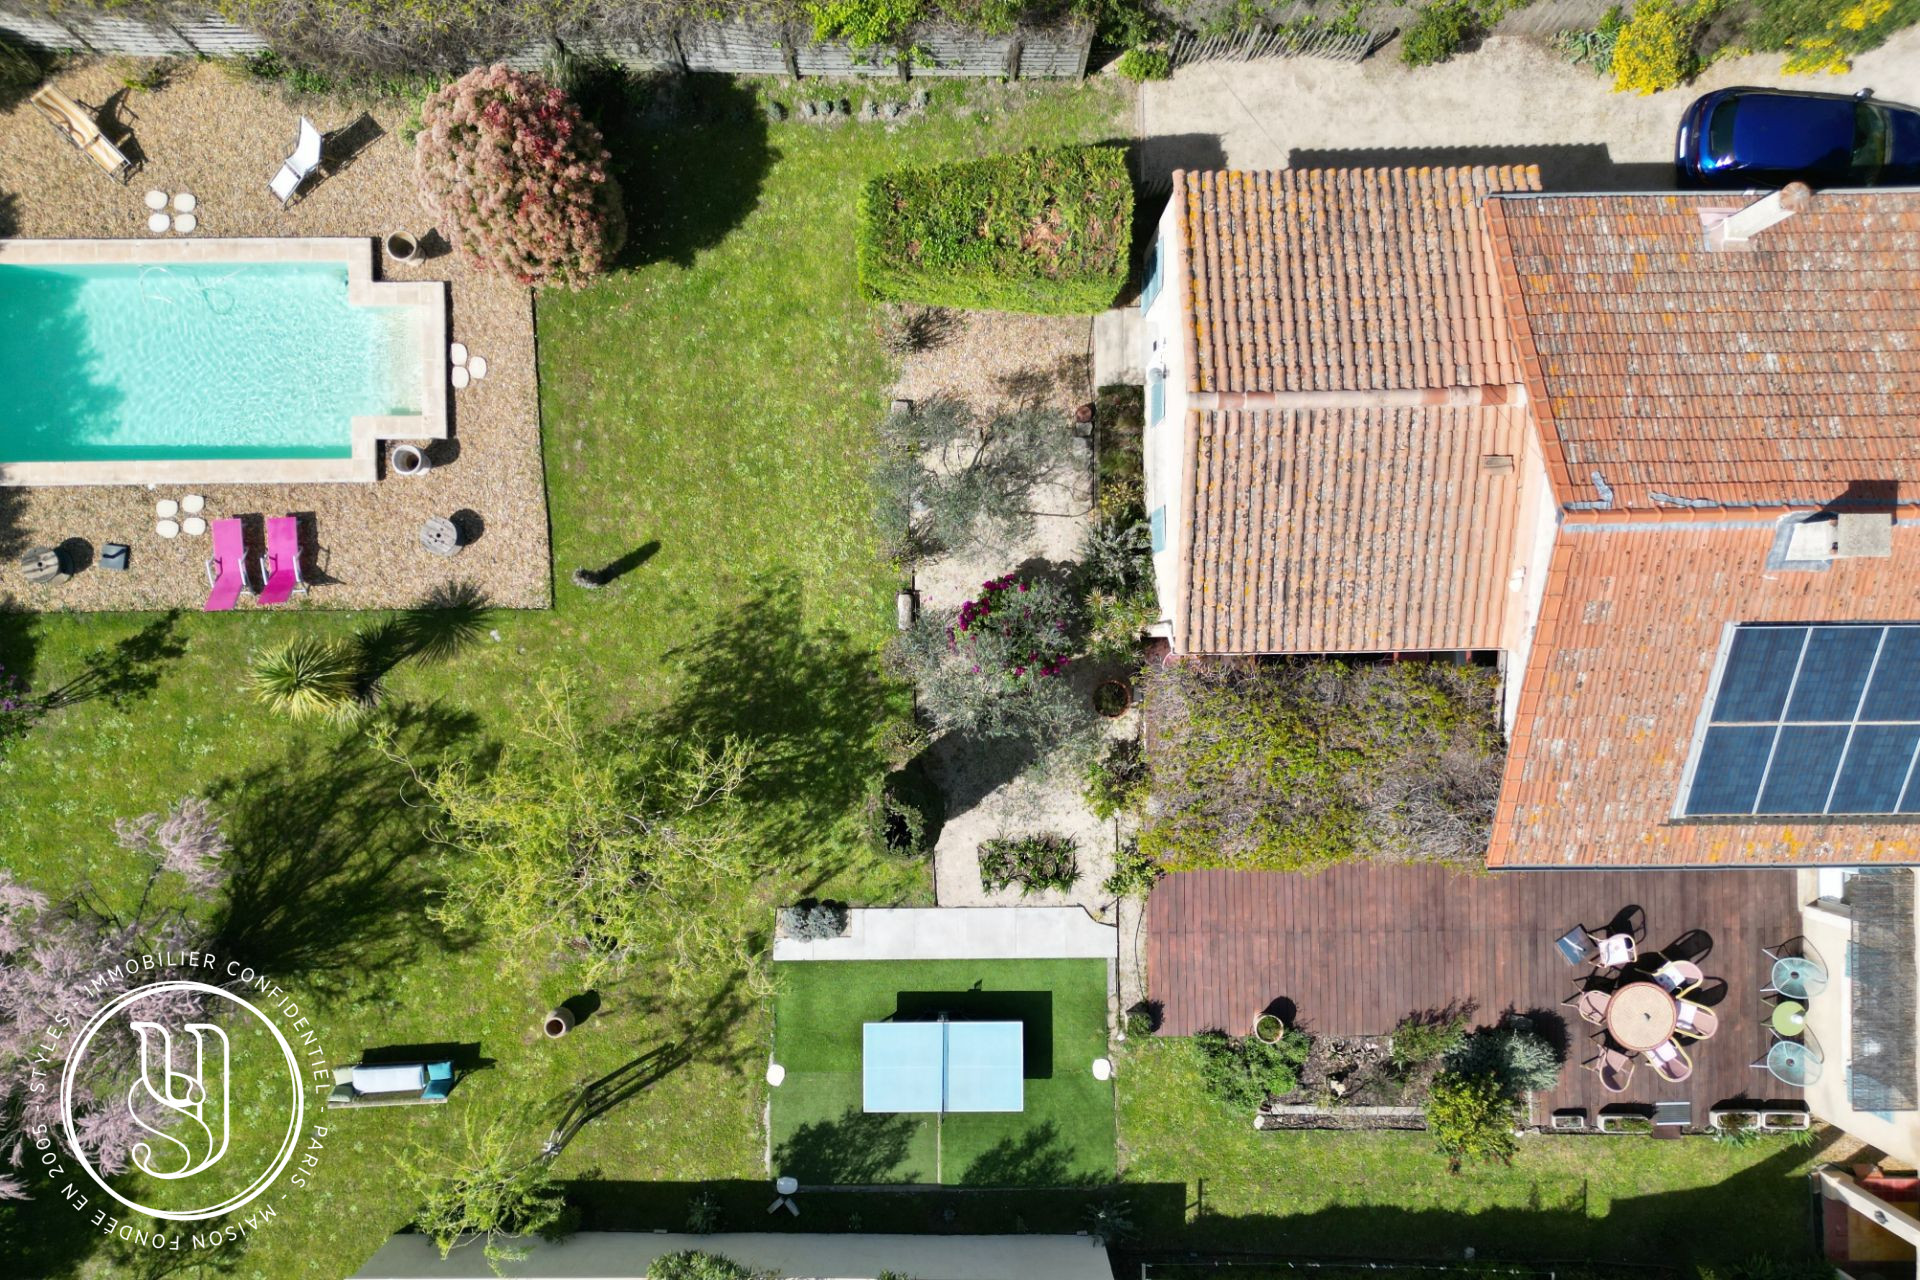 Saint-Rémy-de-Provence - centre on foot, a superb 50s house with its garden - image 7